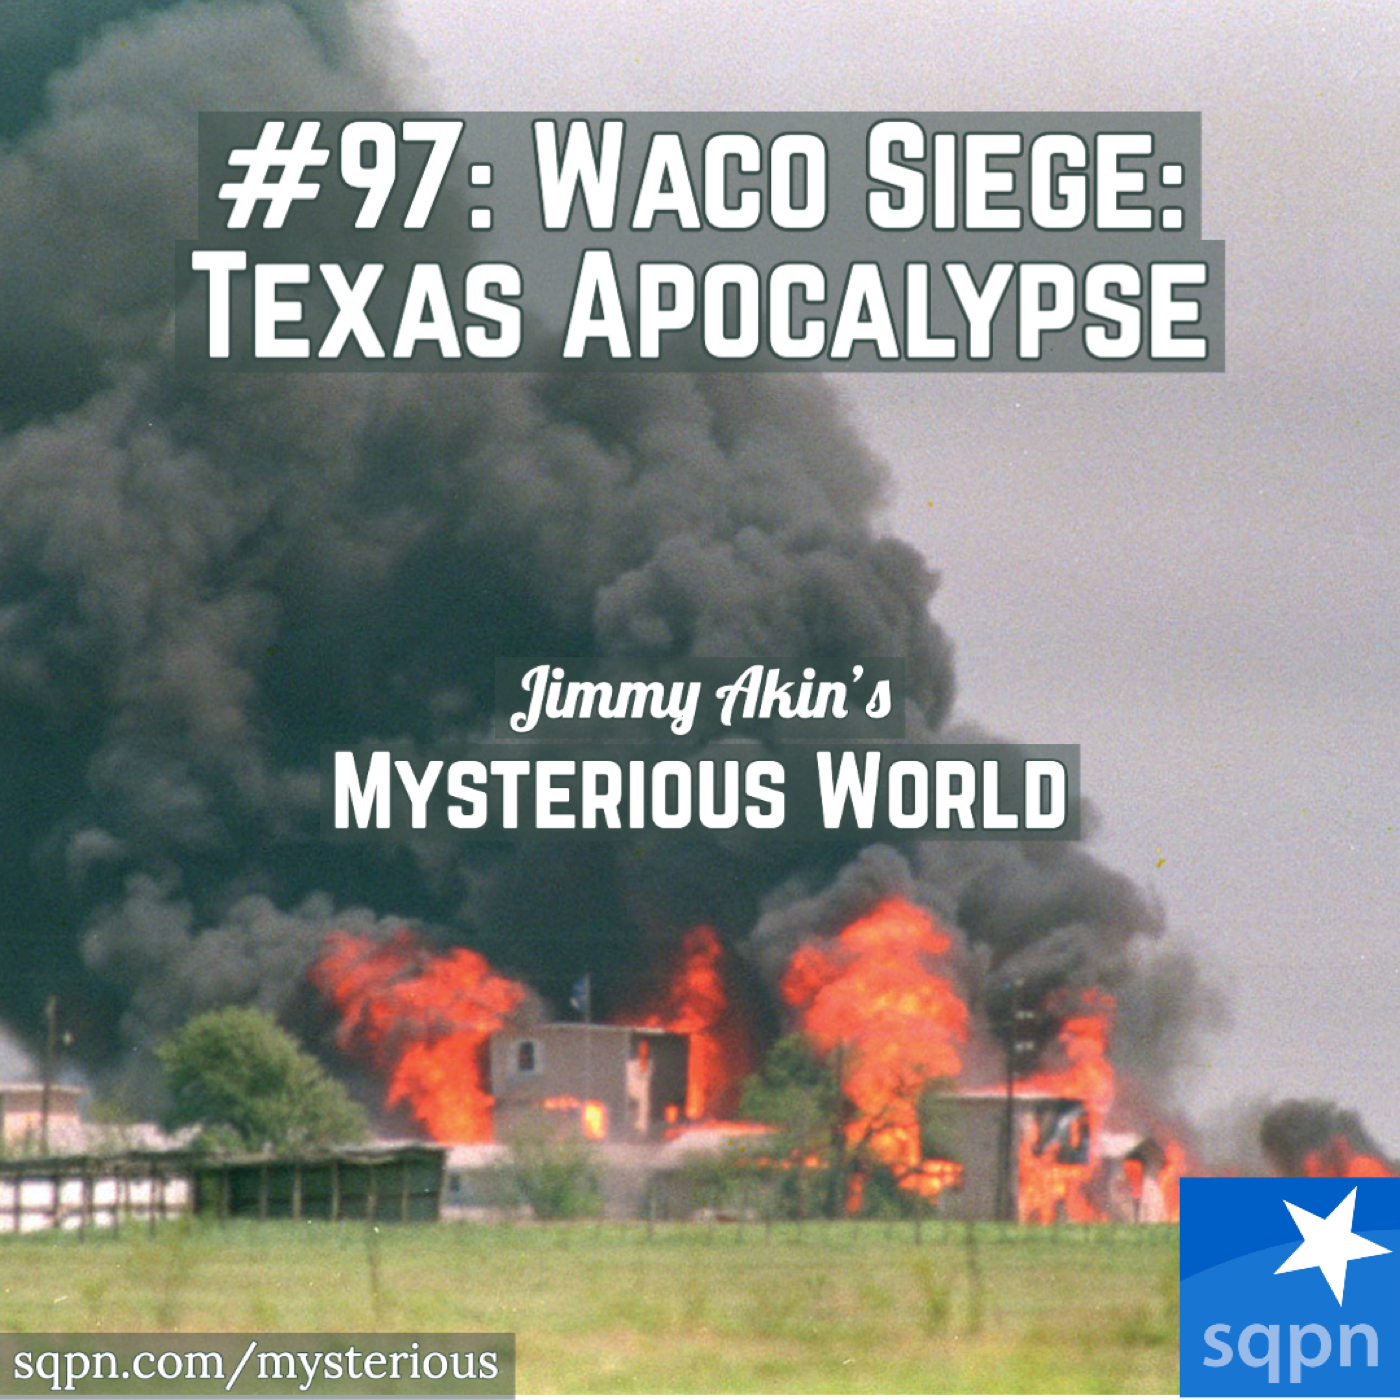 Waco Siege: The Evidence (David Koresh, Branch Davidians, Texas Apocalypse)